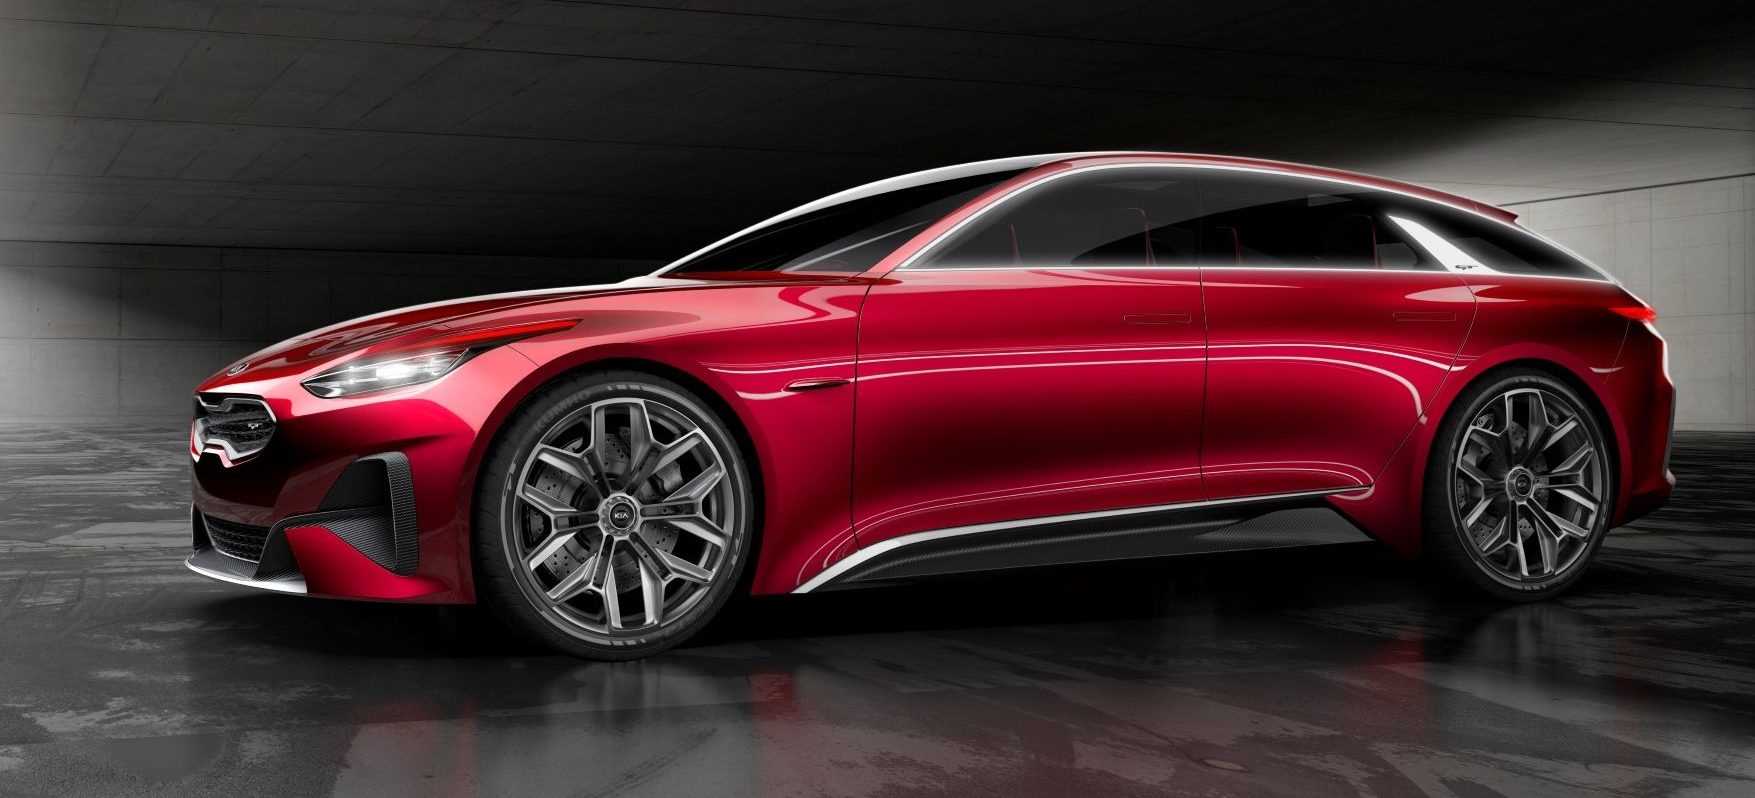 Kia Proceed Concept 2017